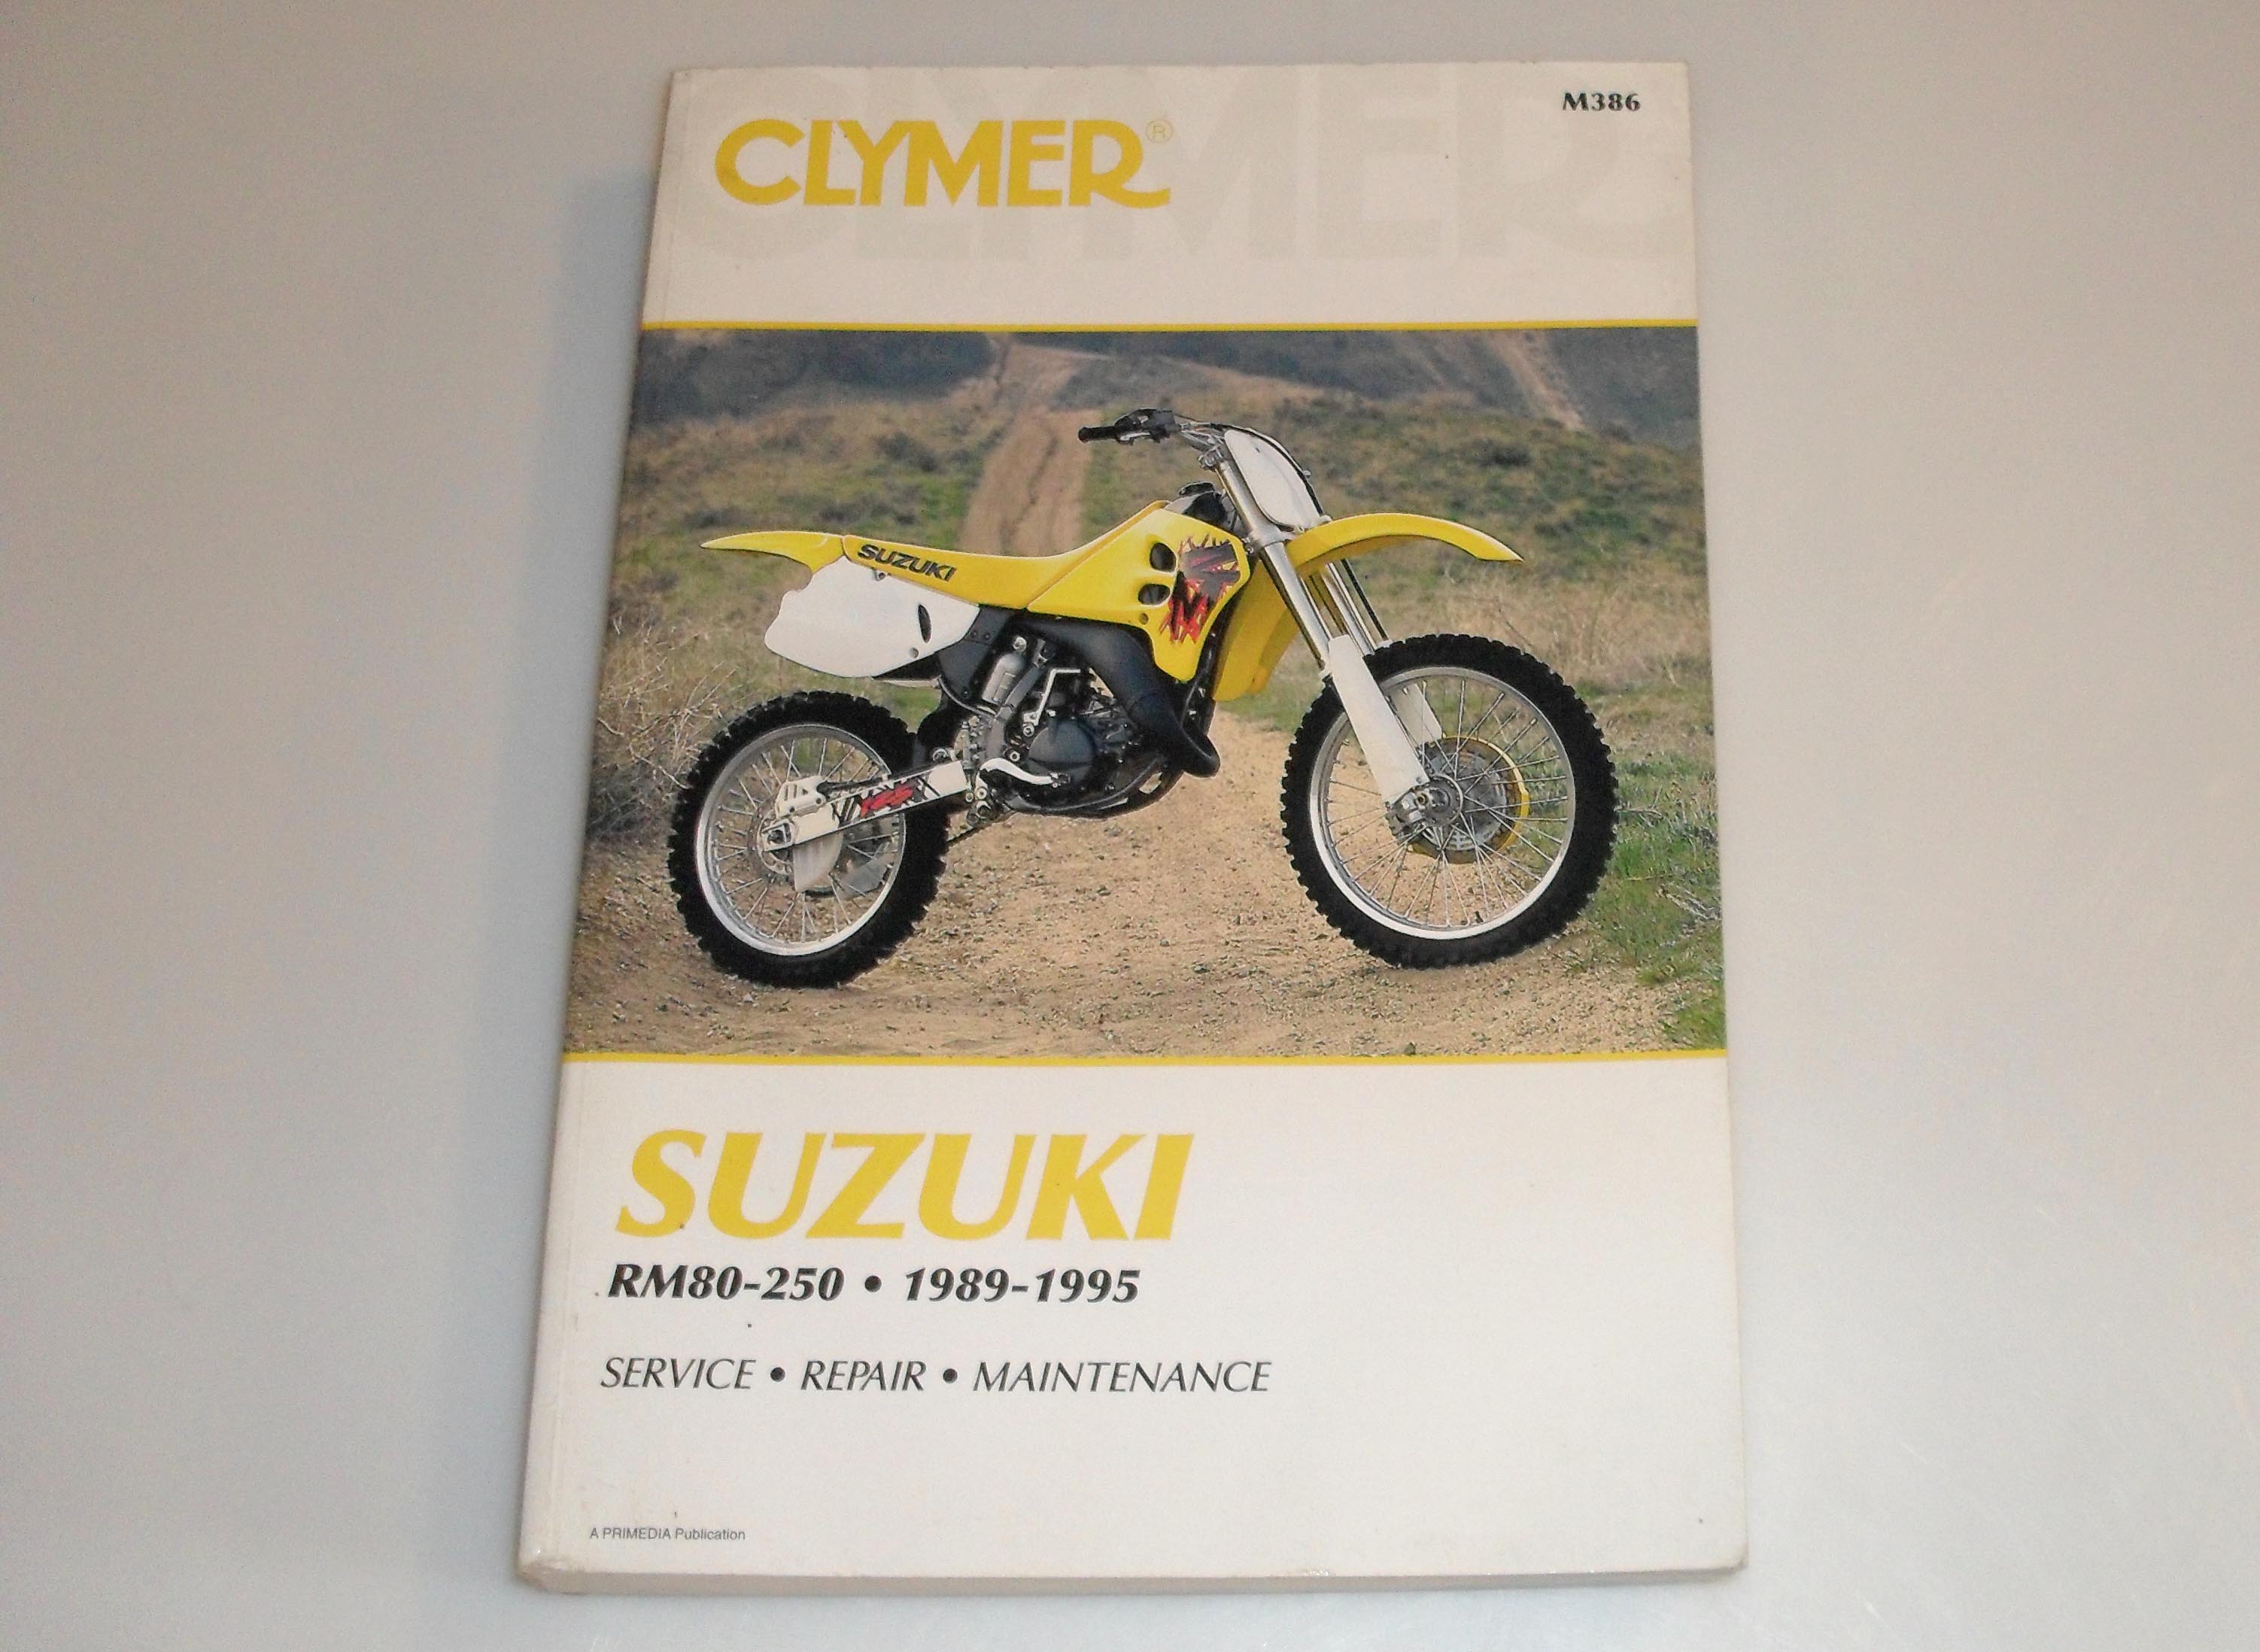 Cm400 Clymer Manual Download